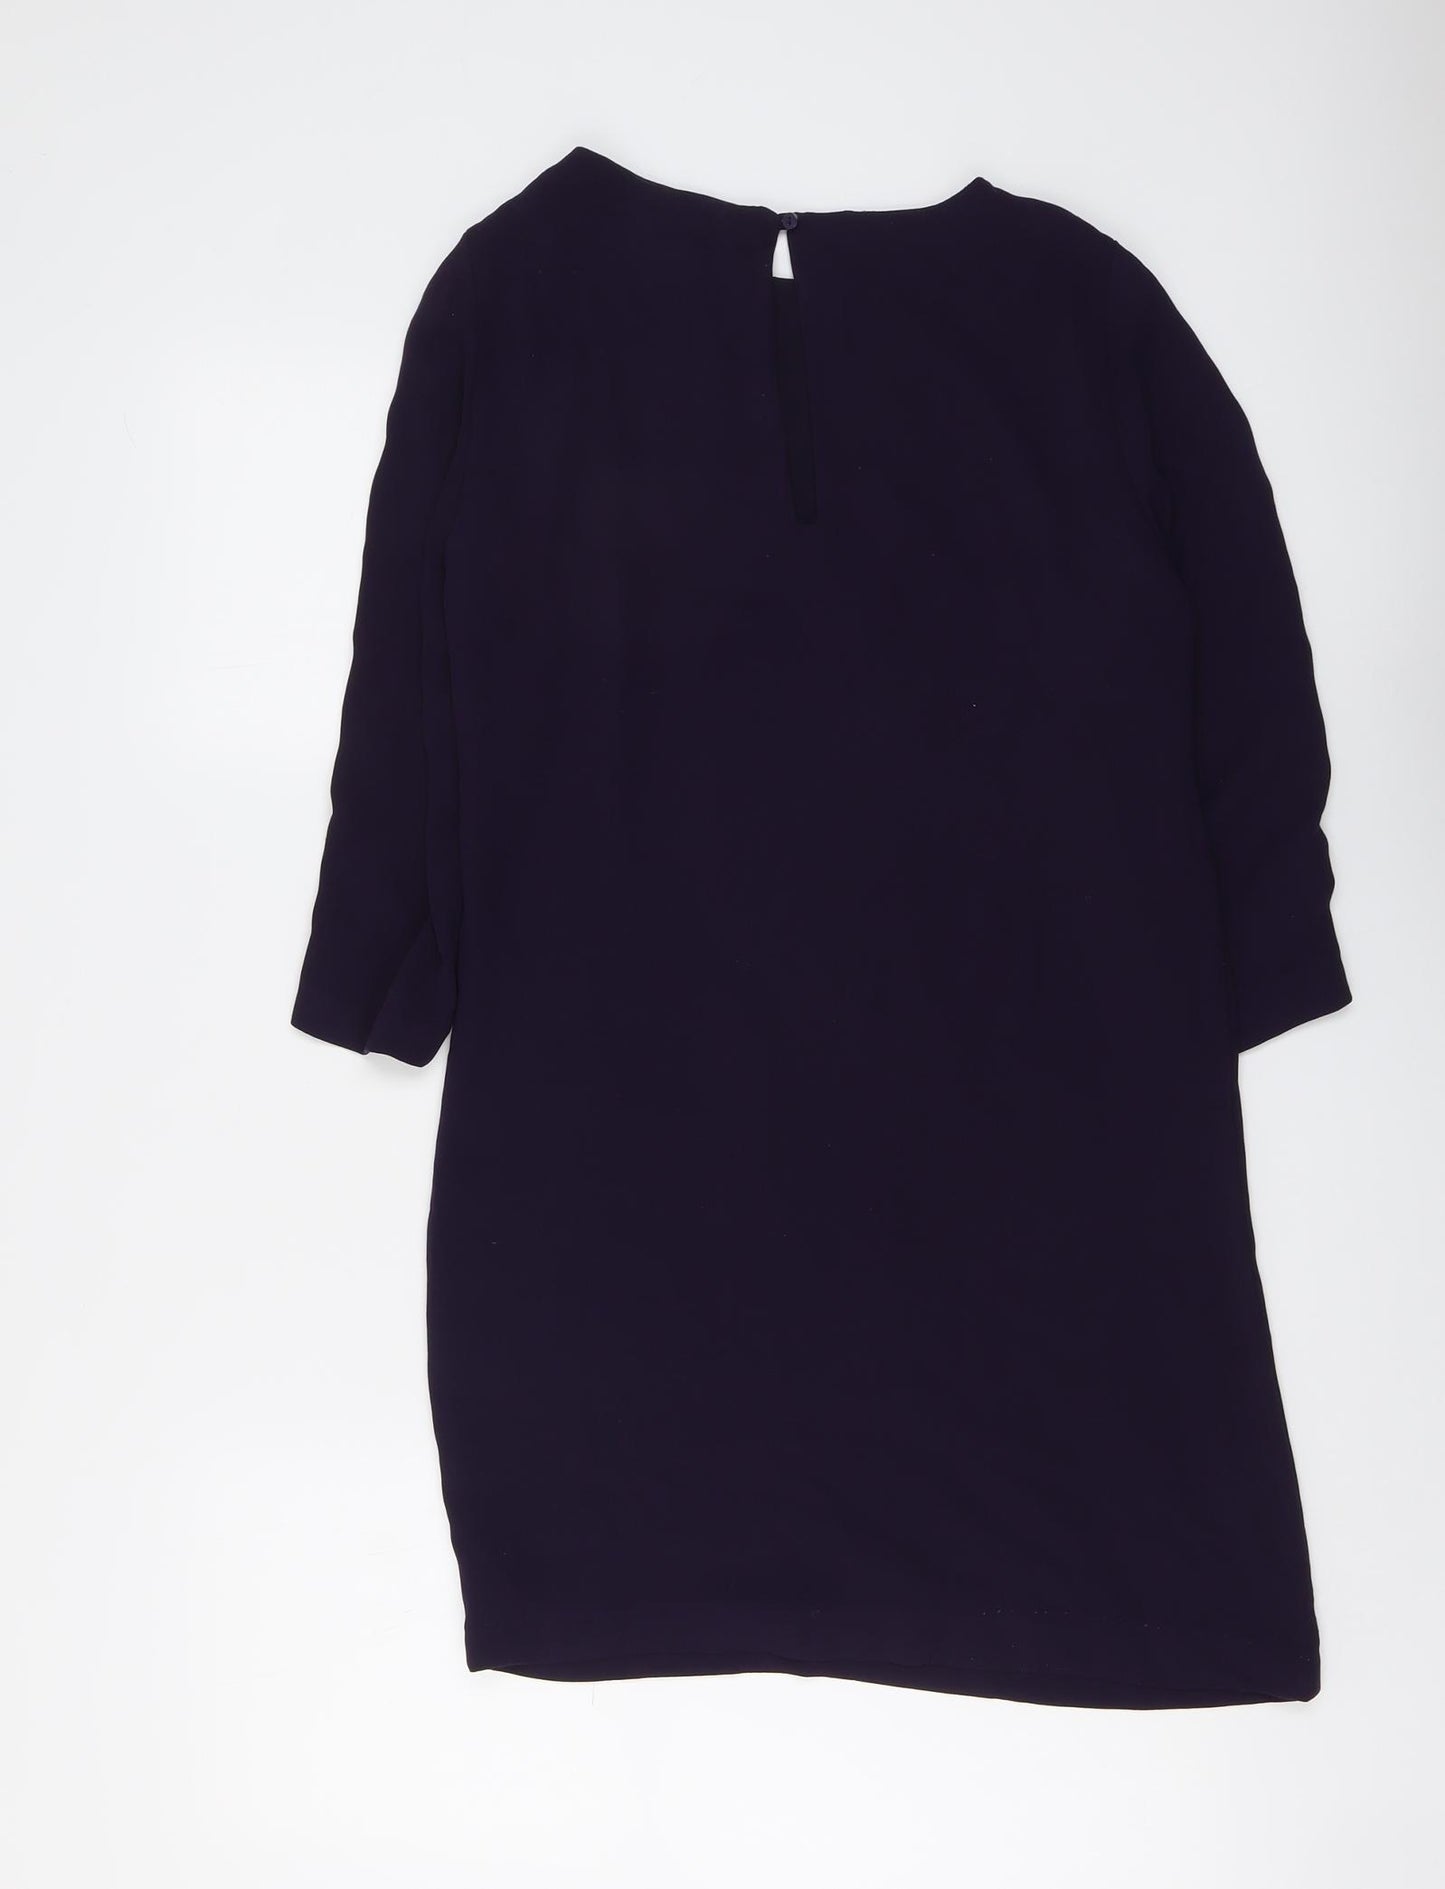 Zara Womens Purple Polyester A-Line Size XS Round Neck Button